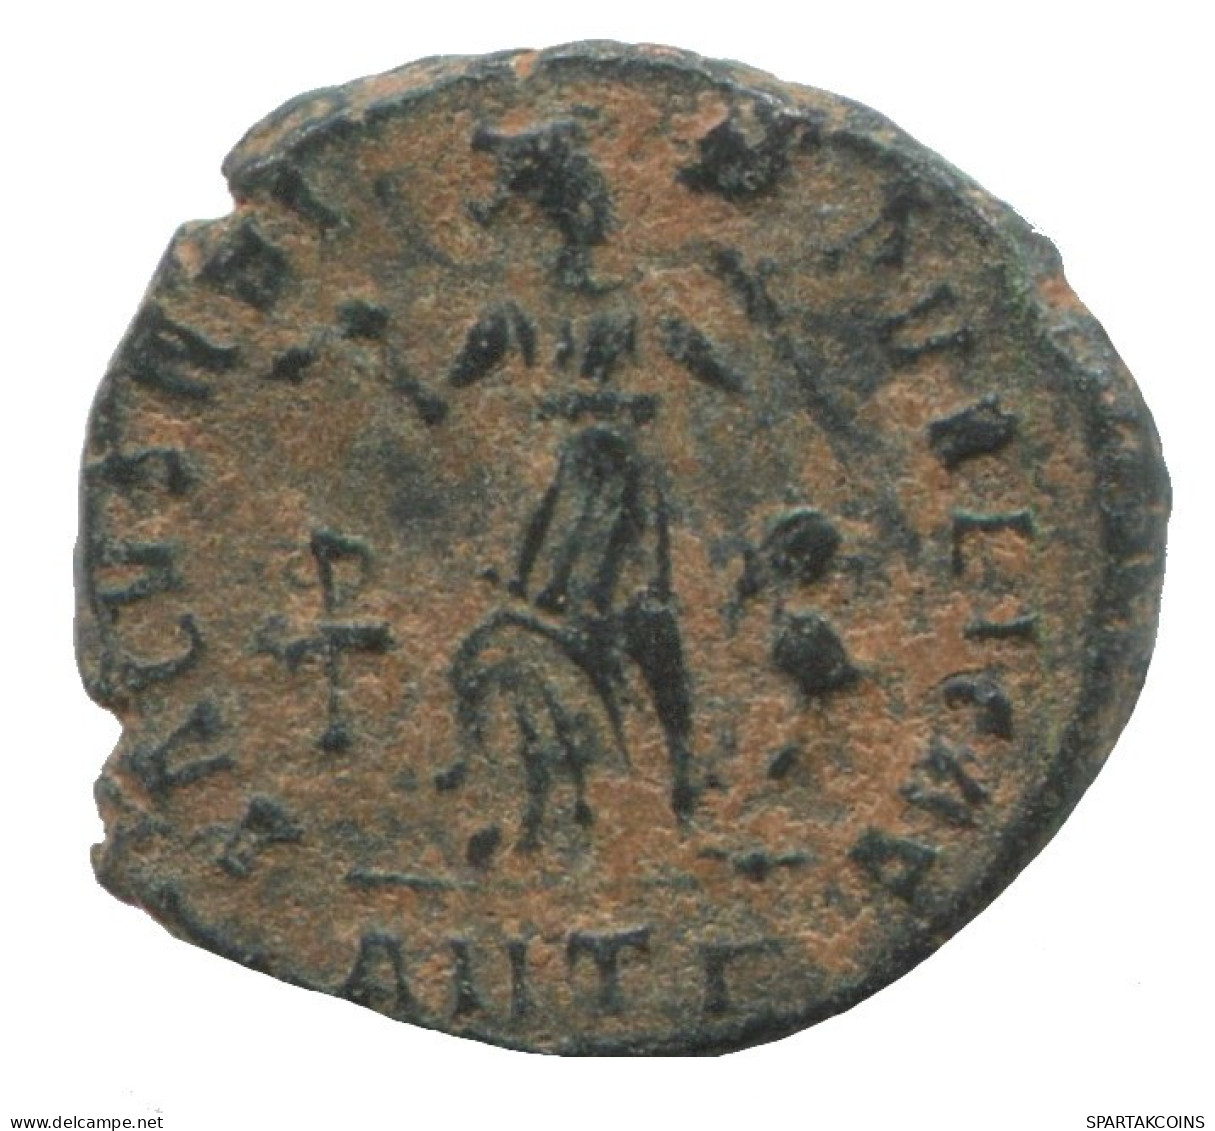 ARCADIUS ANTIOCH ANTГ AD388 SALVS REI-PVBLICAE VICTORY 1.2g/15m #ANN1590.10.D.A - La Caduta Dell'Impero Romano (363 / 476)